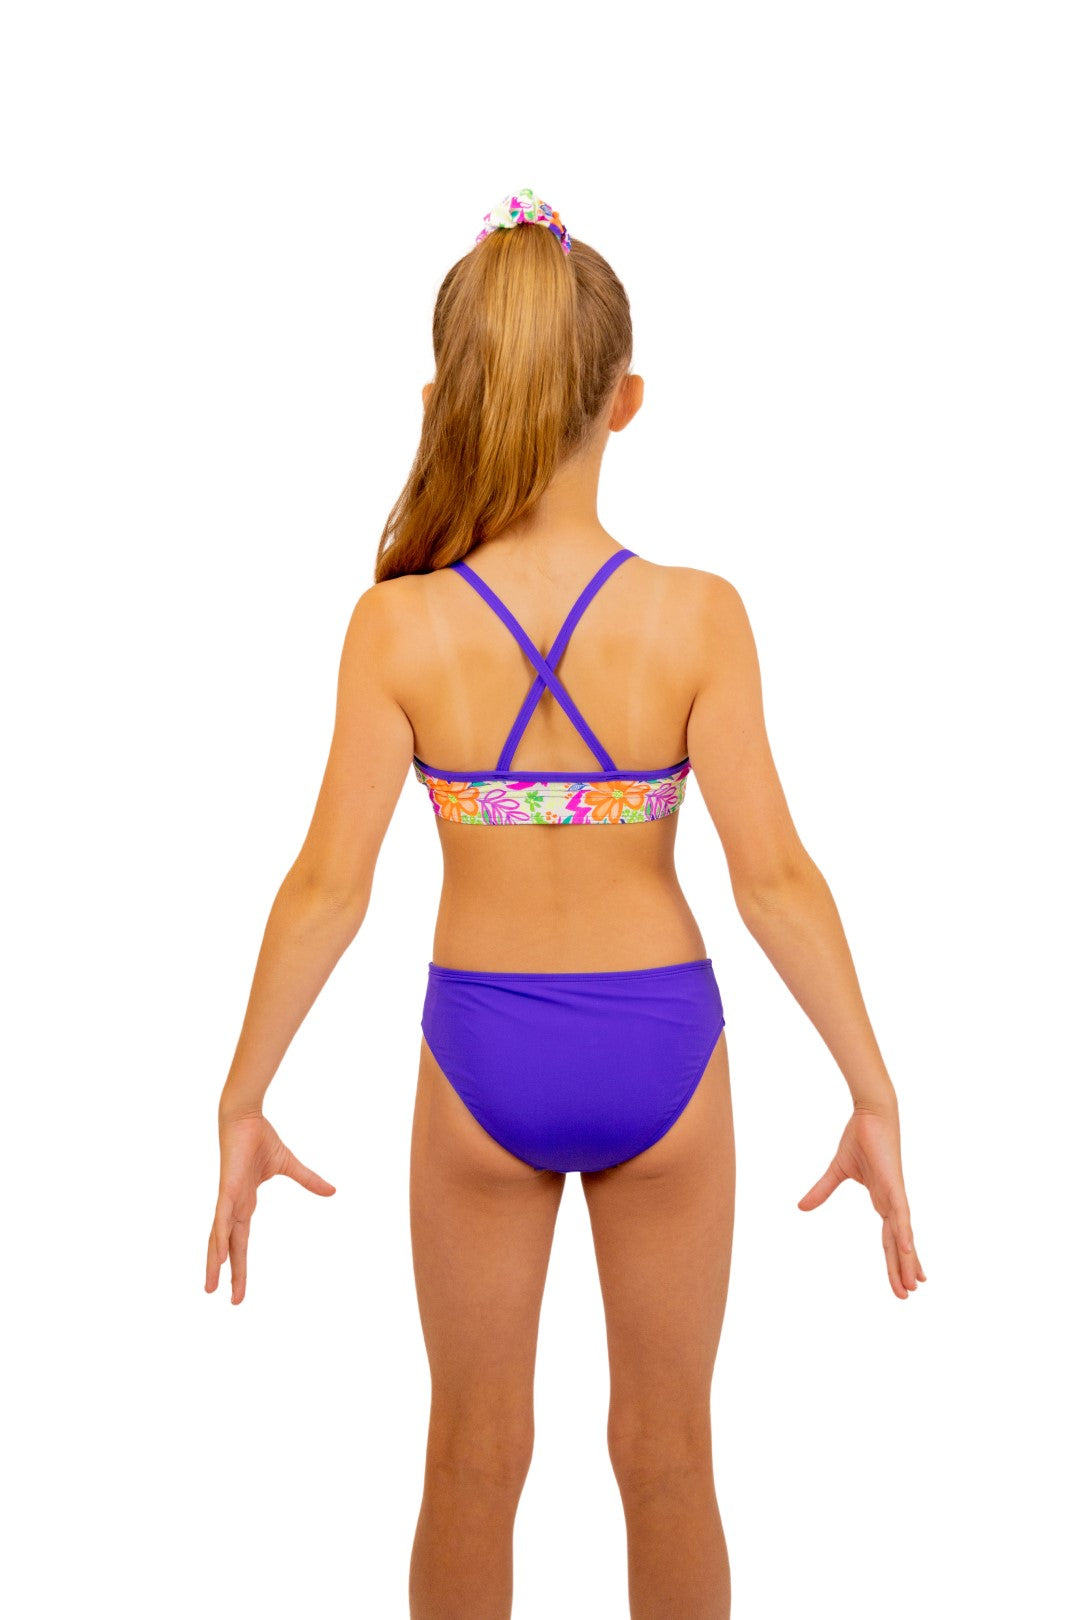 Purple Bikini Bottoms for girls. Swimwear, Bikinis, Separates, Swimsuit, Kids Swimwear, Girls, Togs, Beach wear, Swimming, B you Active, B you Swimwear, B you leotards. 